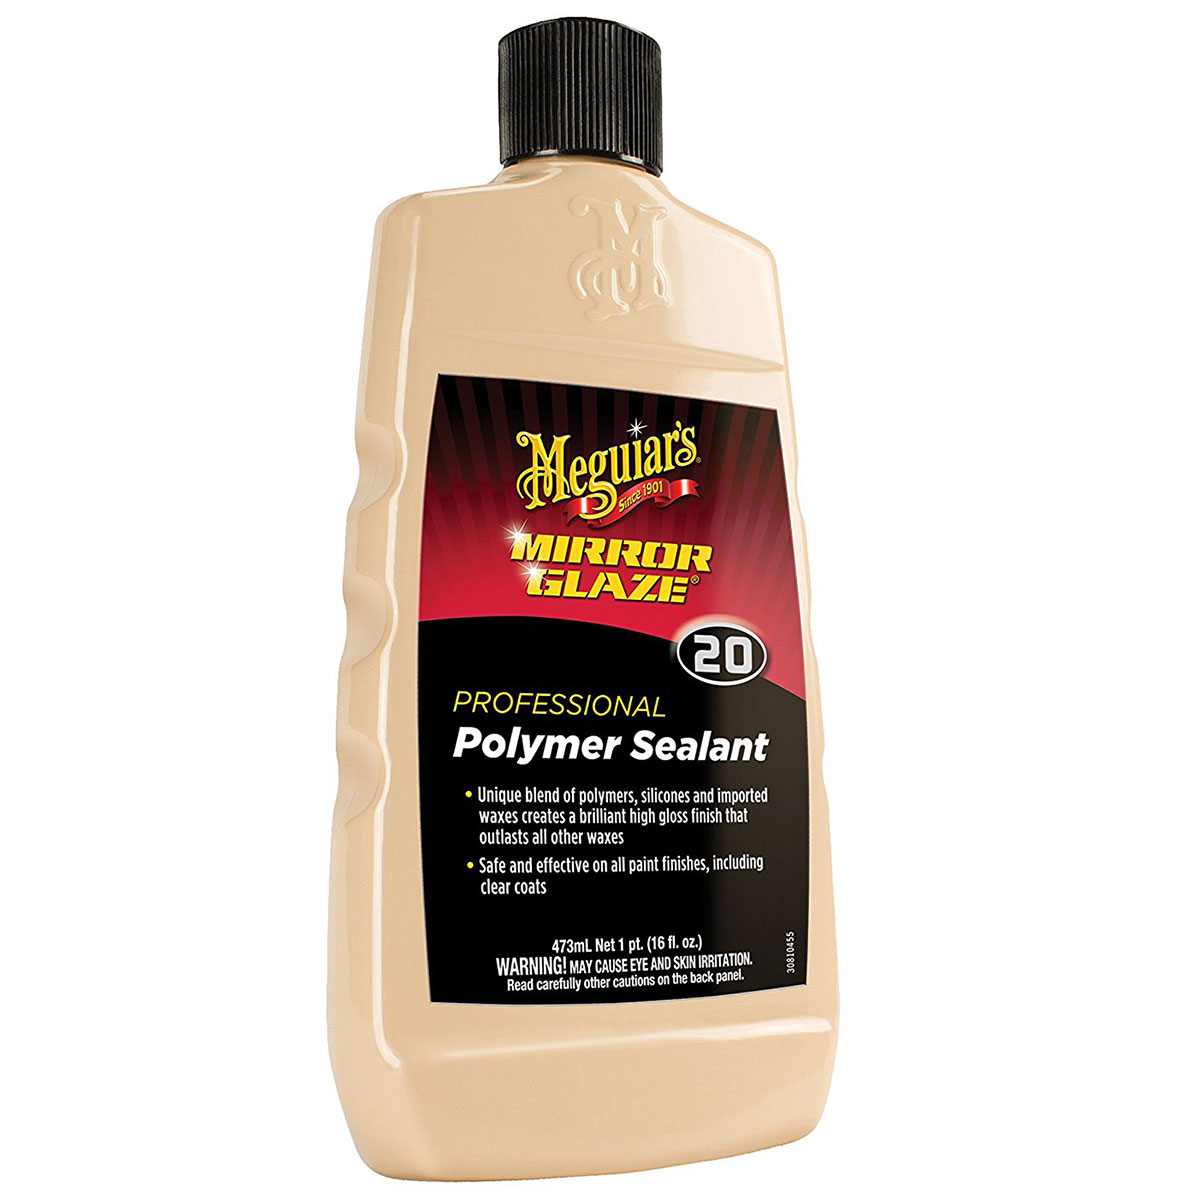 Polymer Sealant Meguiars